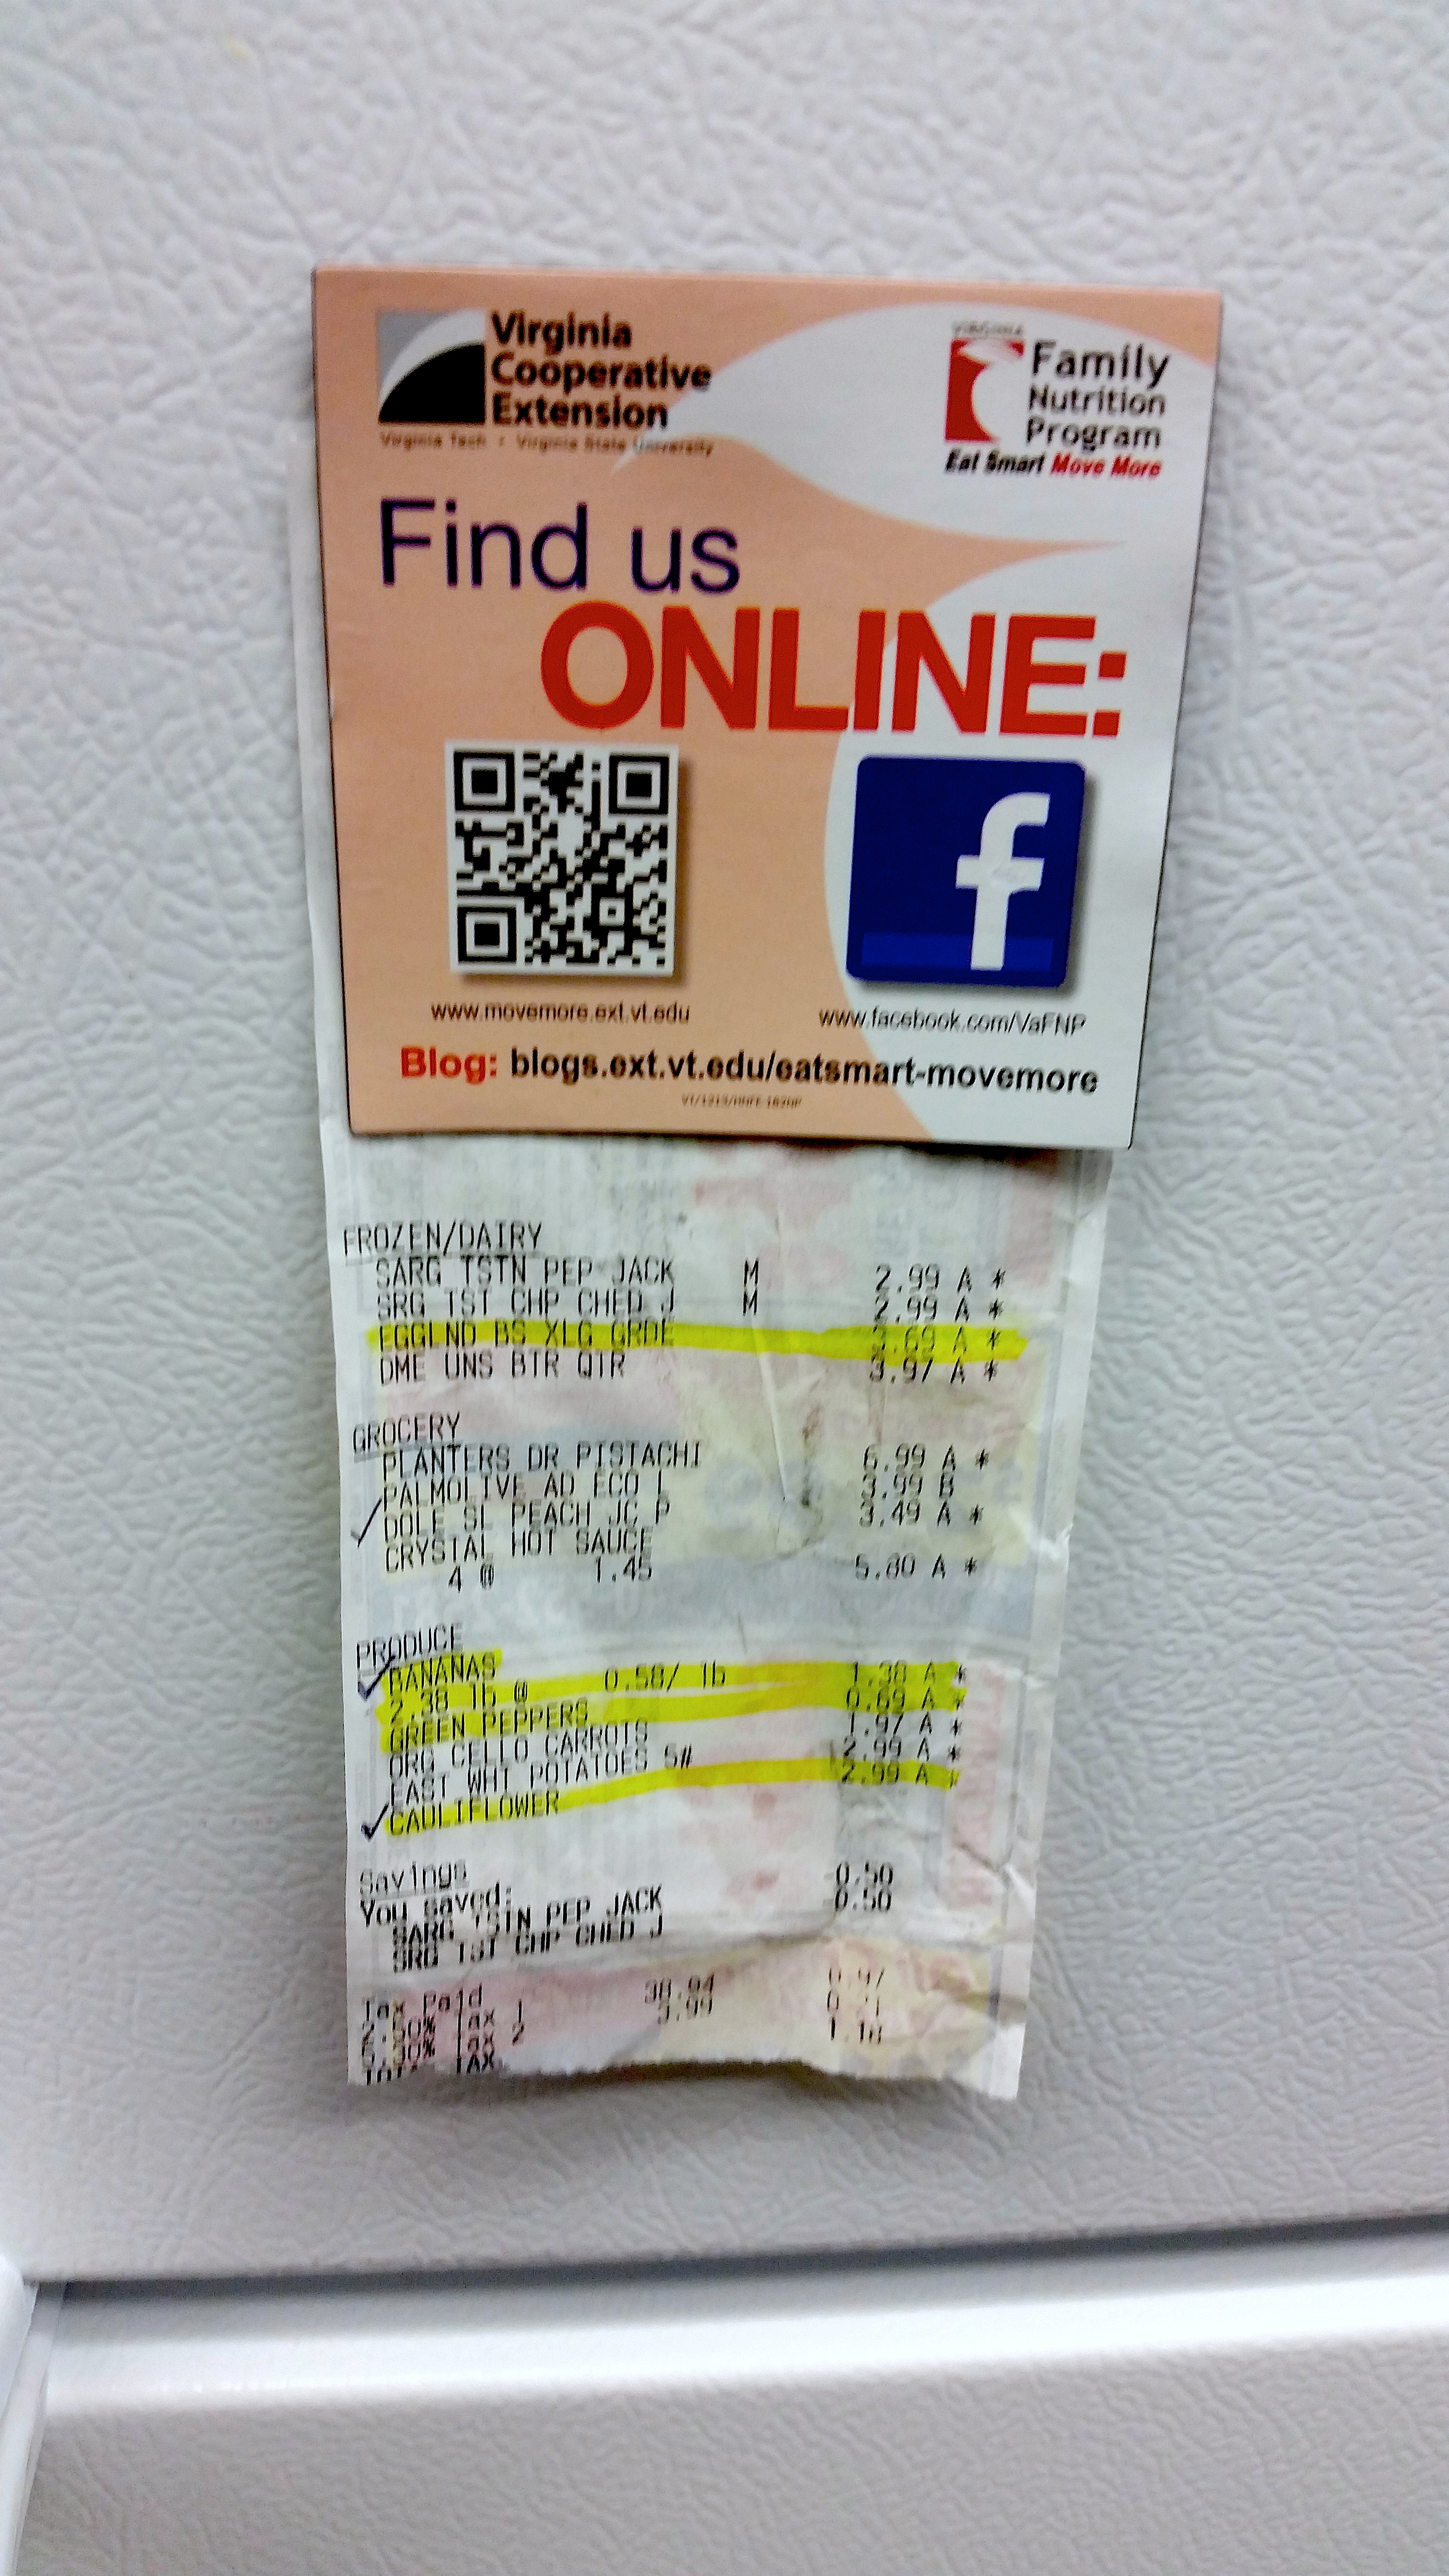 grocery receipt hung on refrigerator door using magnet